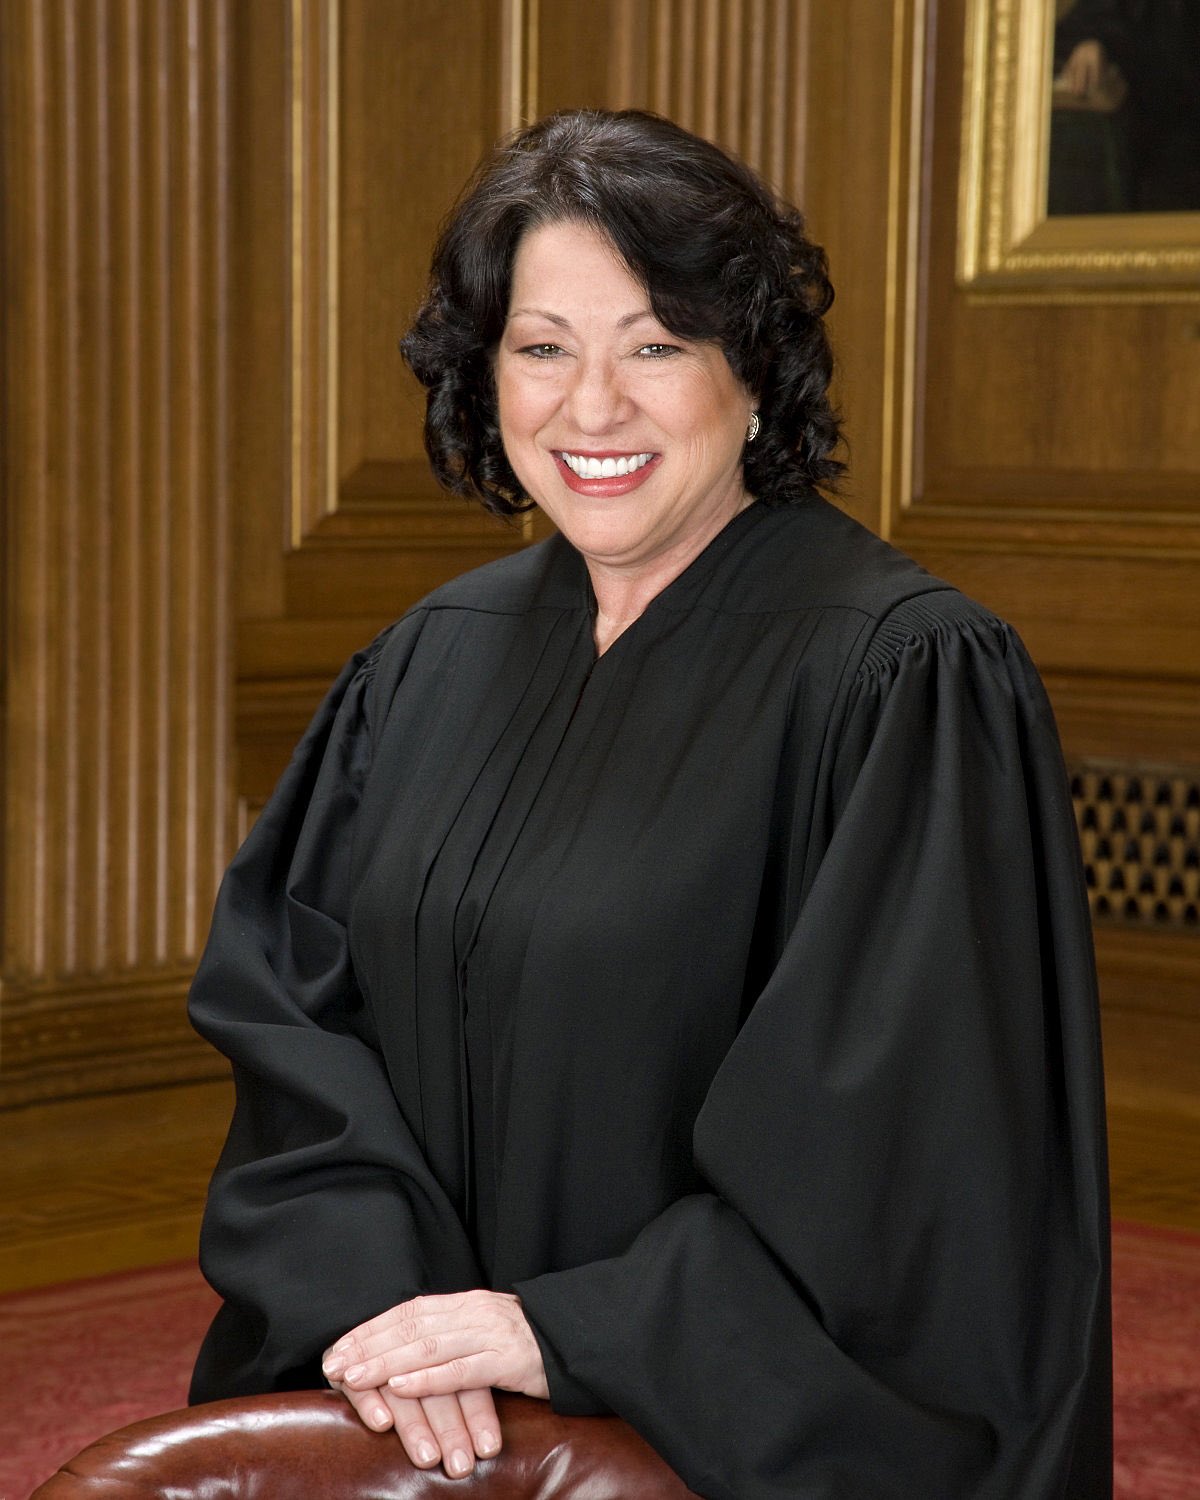 Latina Justice! Happy birthday to Justice Sonia Sotomayor. 